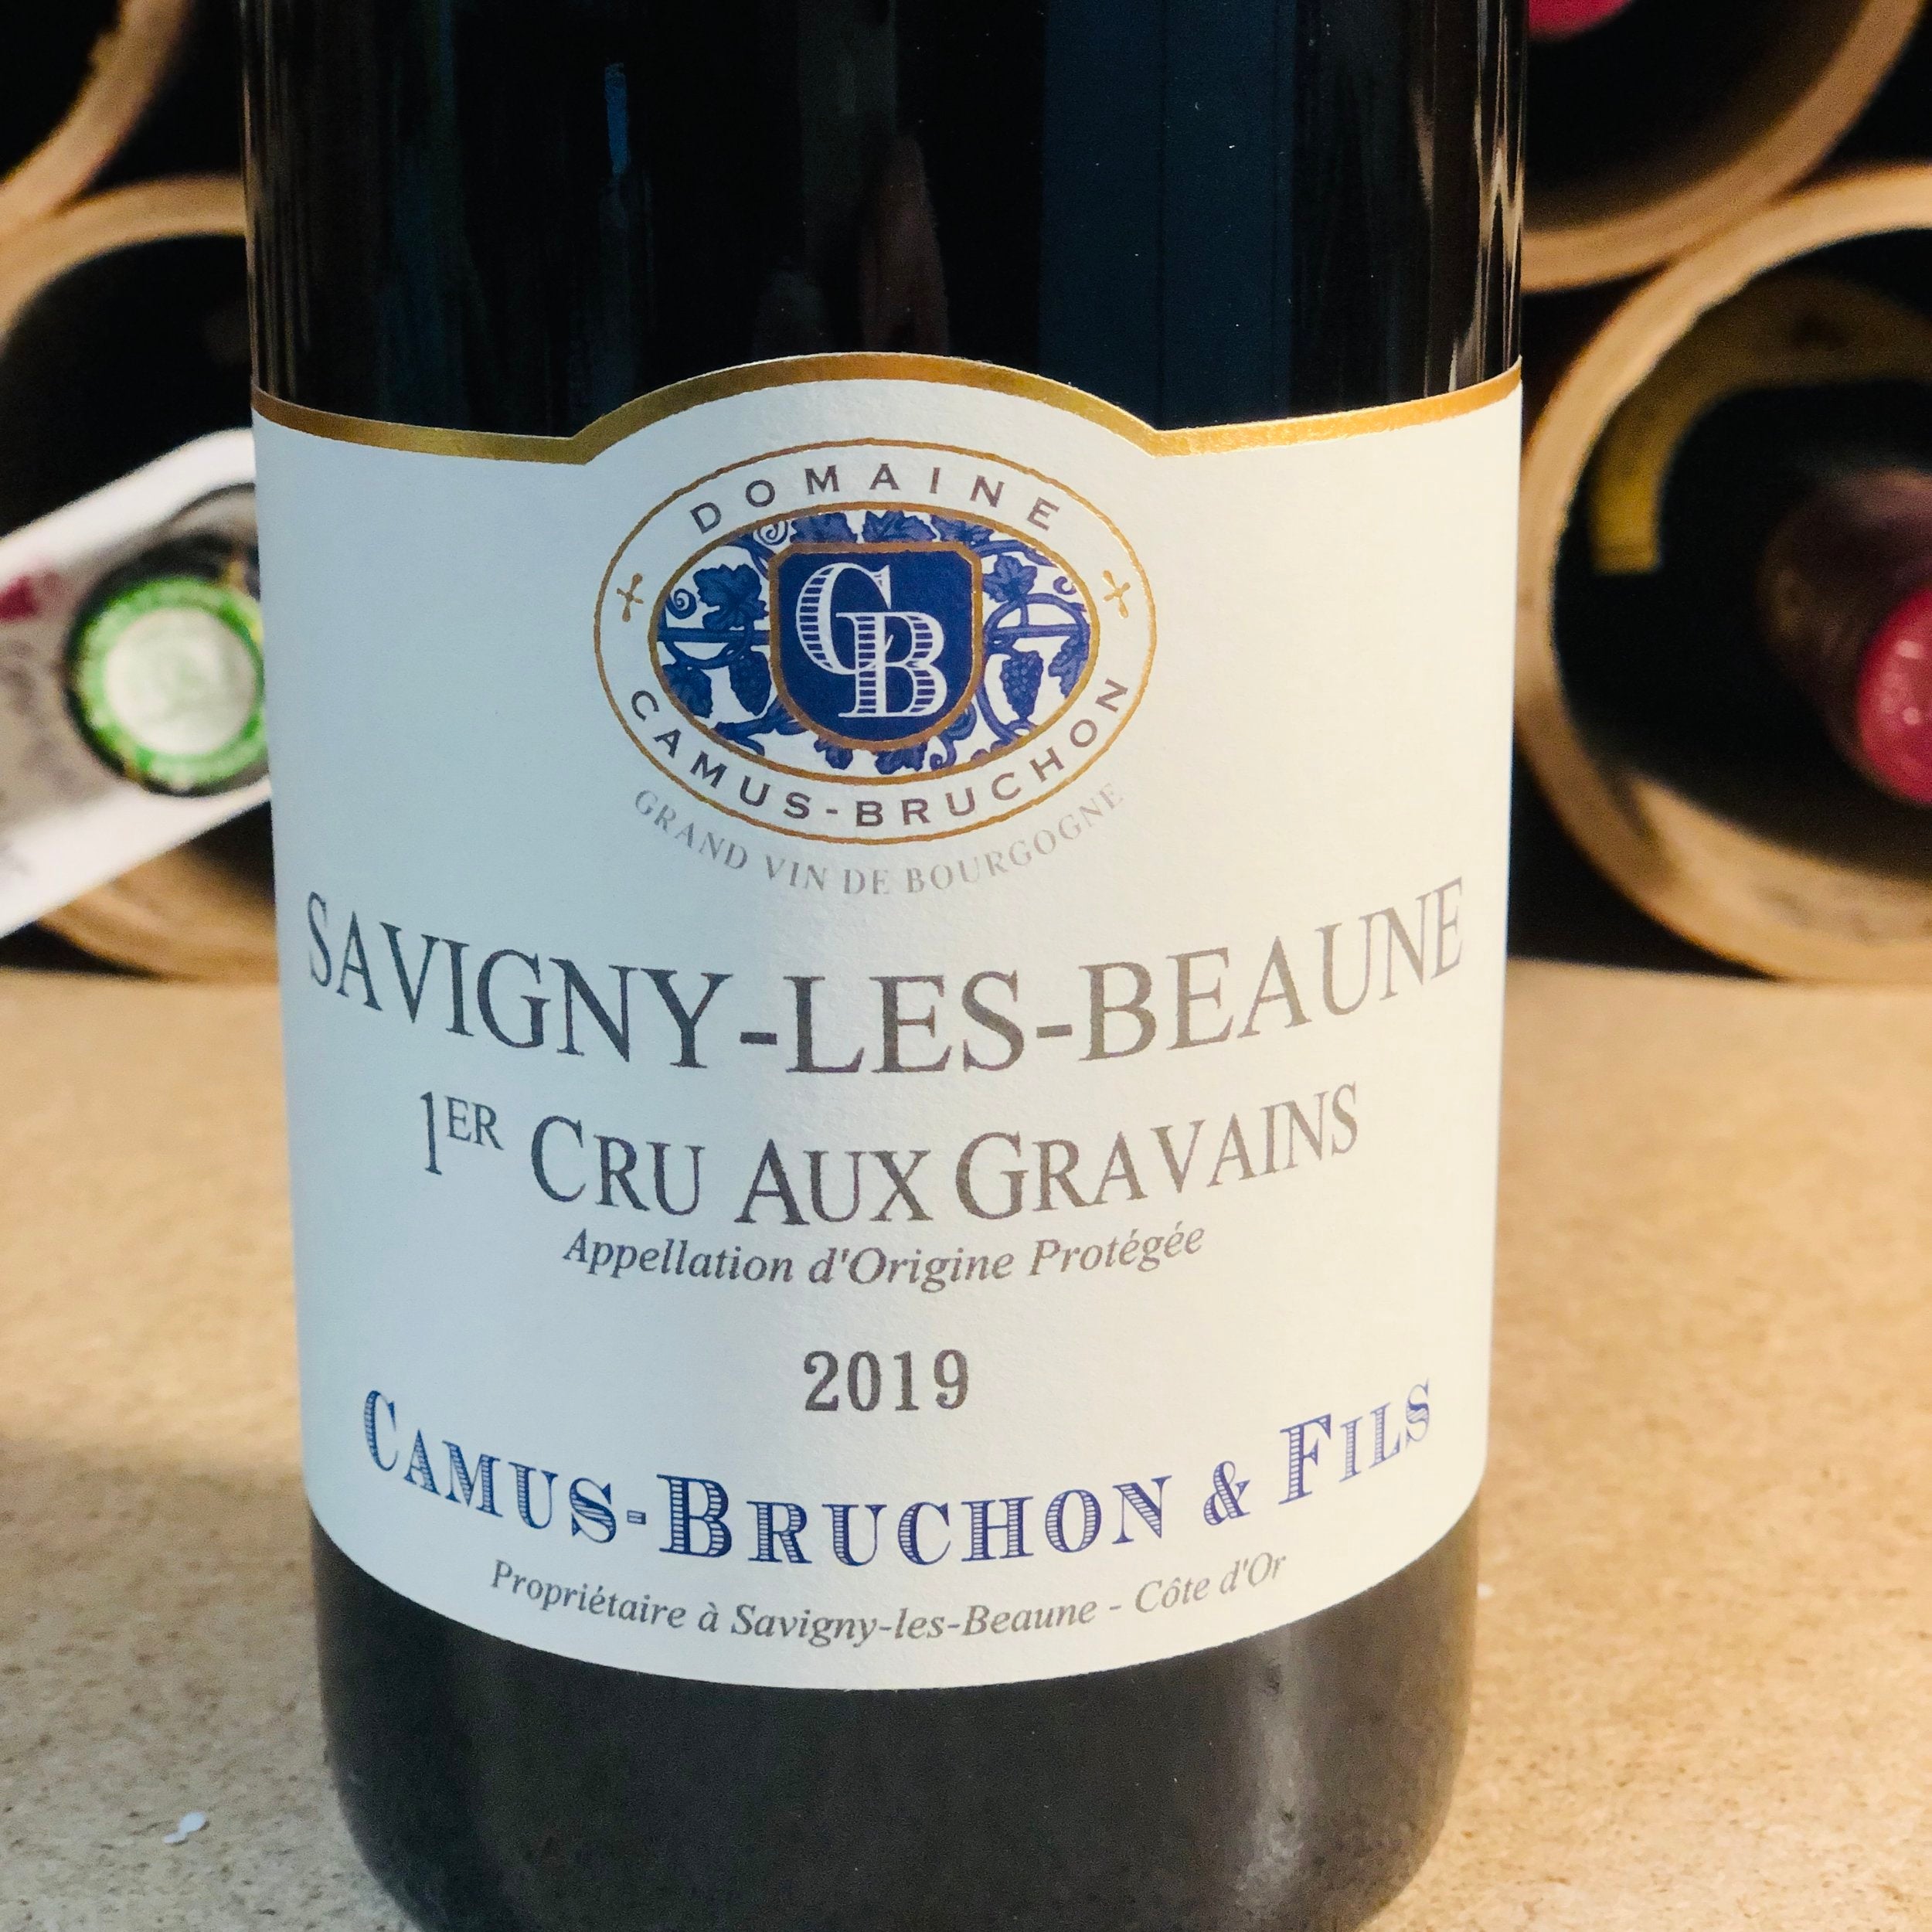 Camus-Bruchon, Savigny-Les-Beaune, Les Gravains, 1er Cru 2019